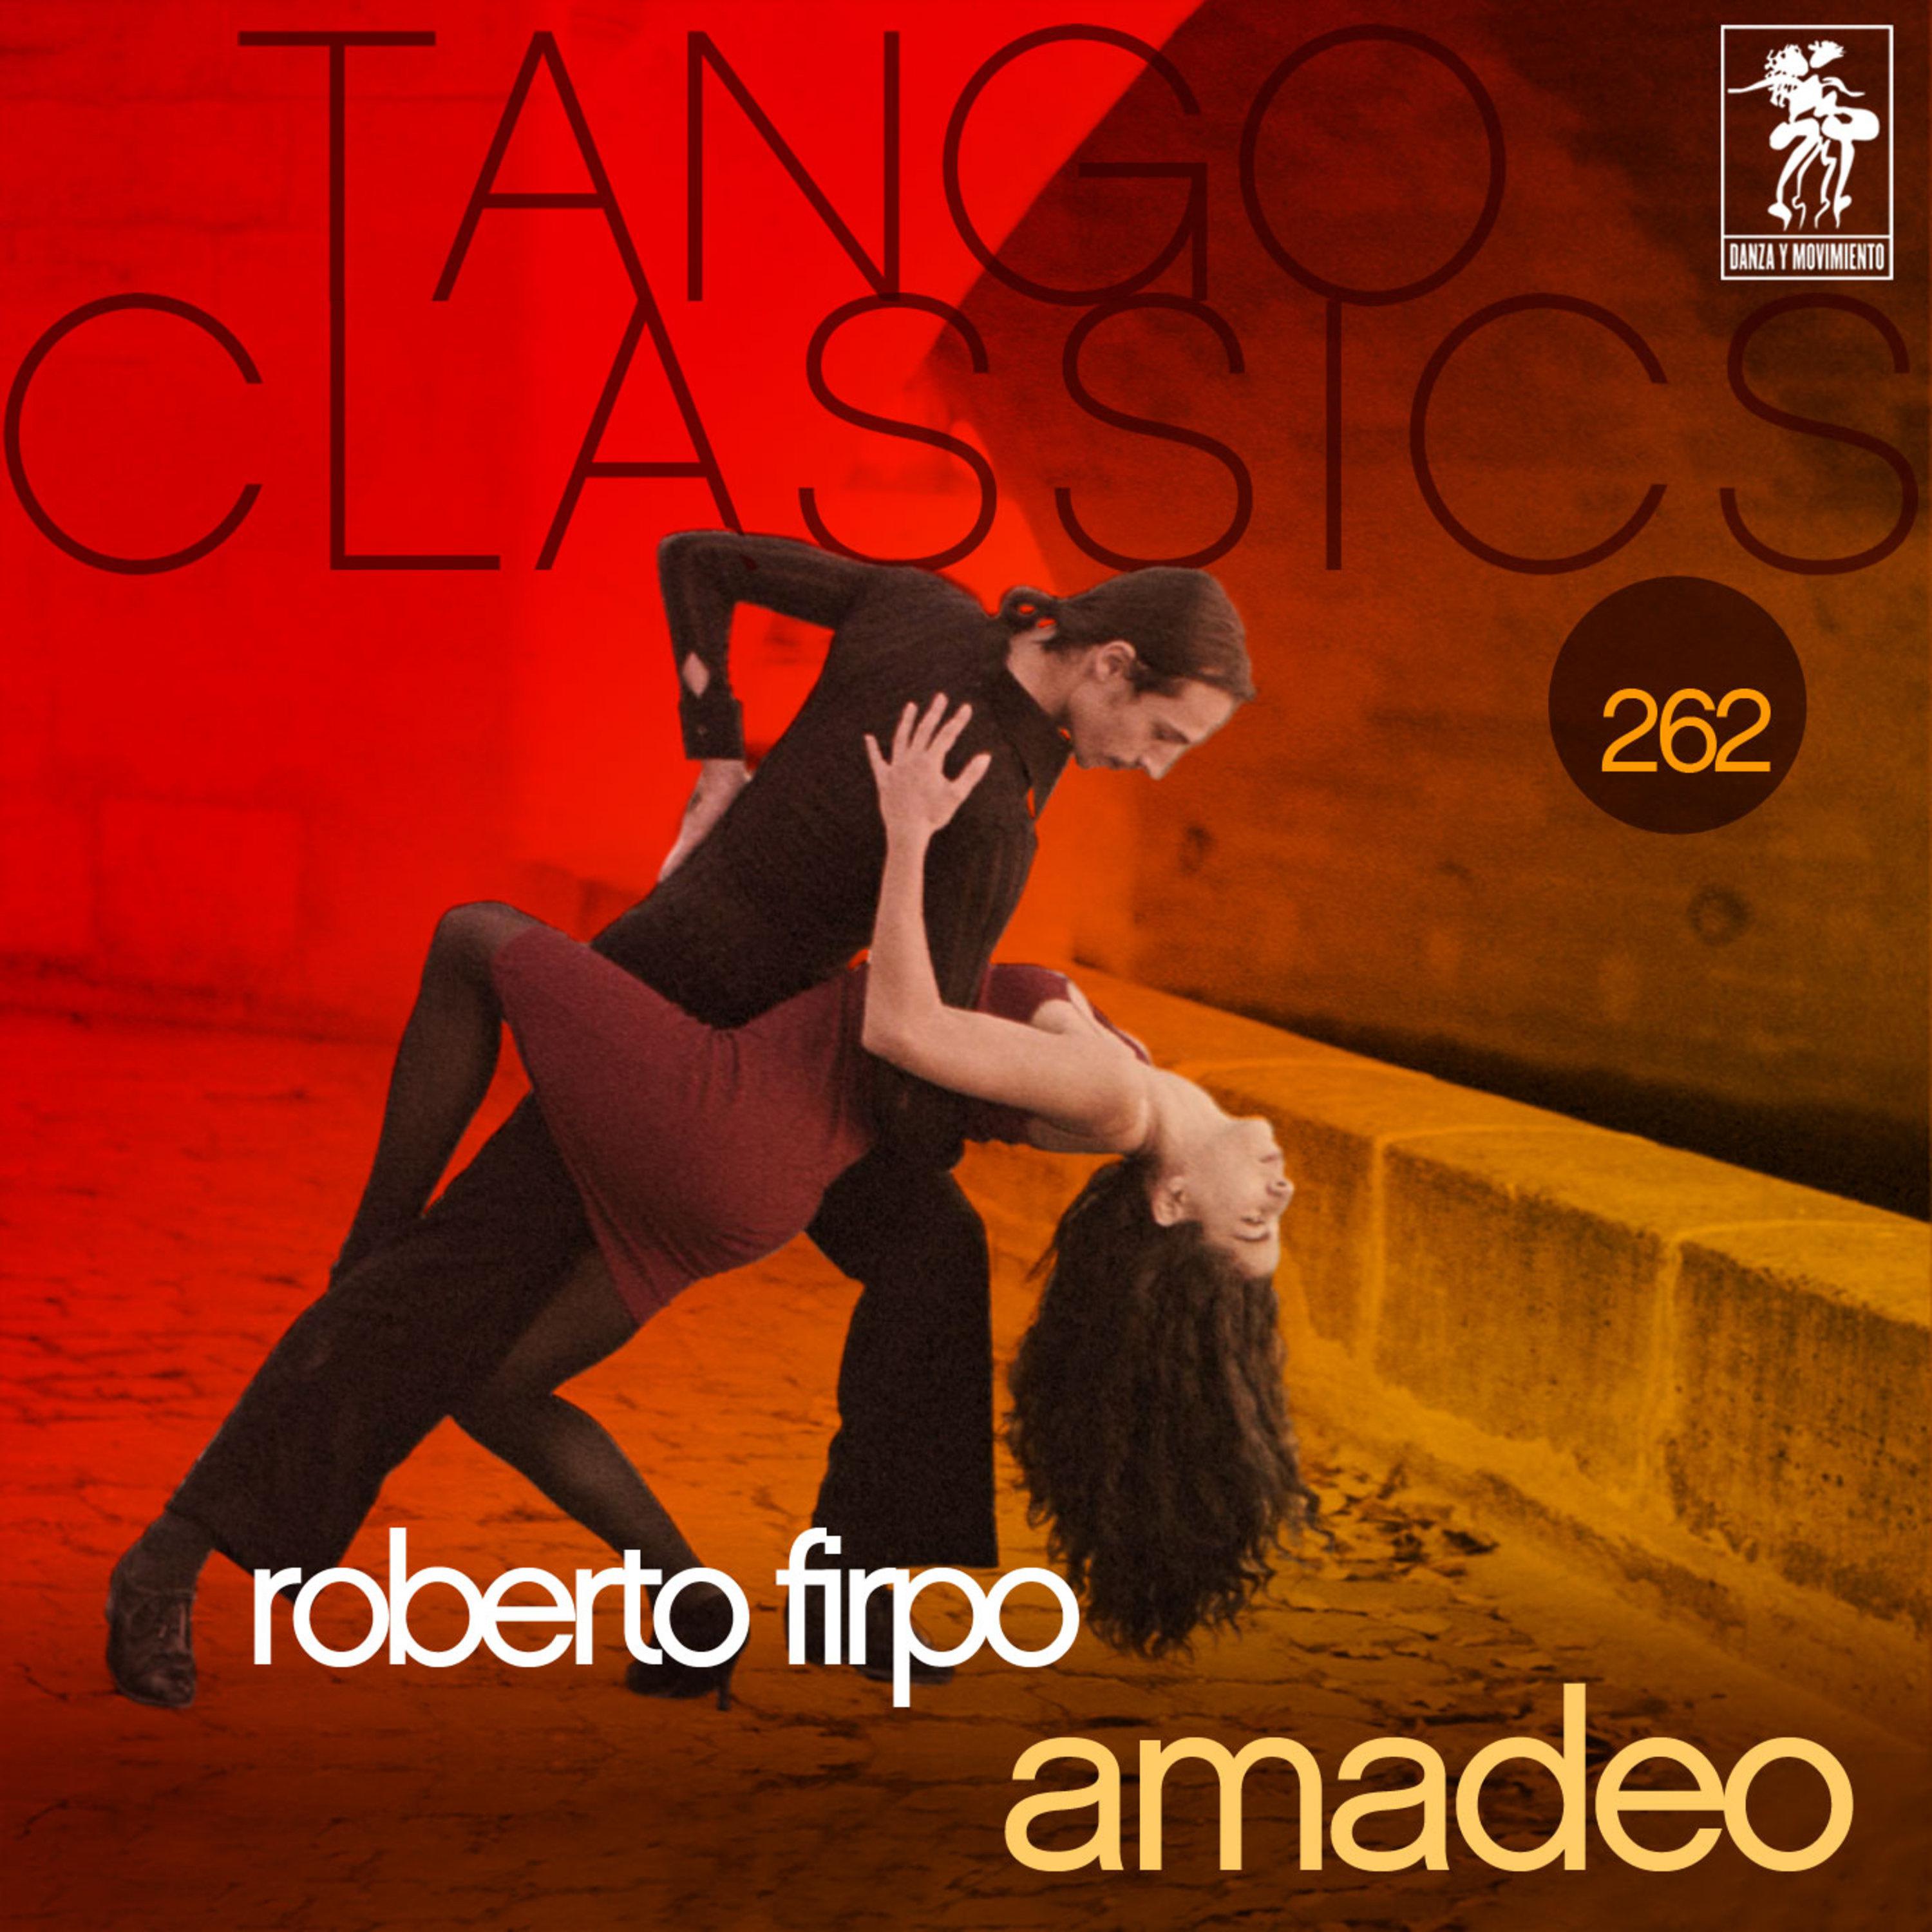 Tango Classics 262: Amadeo